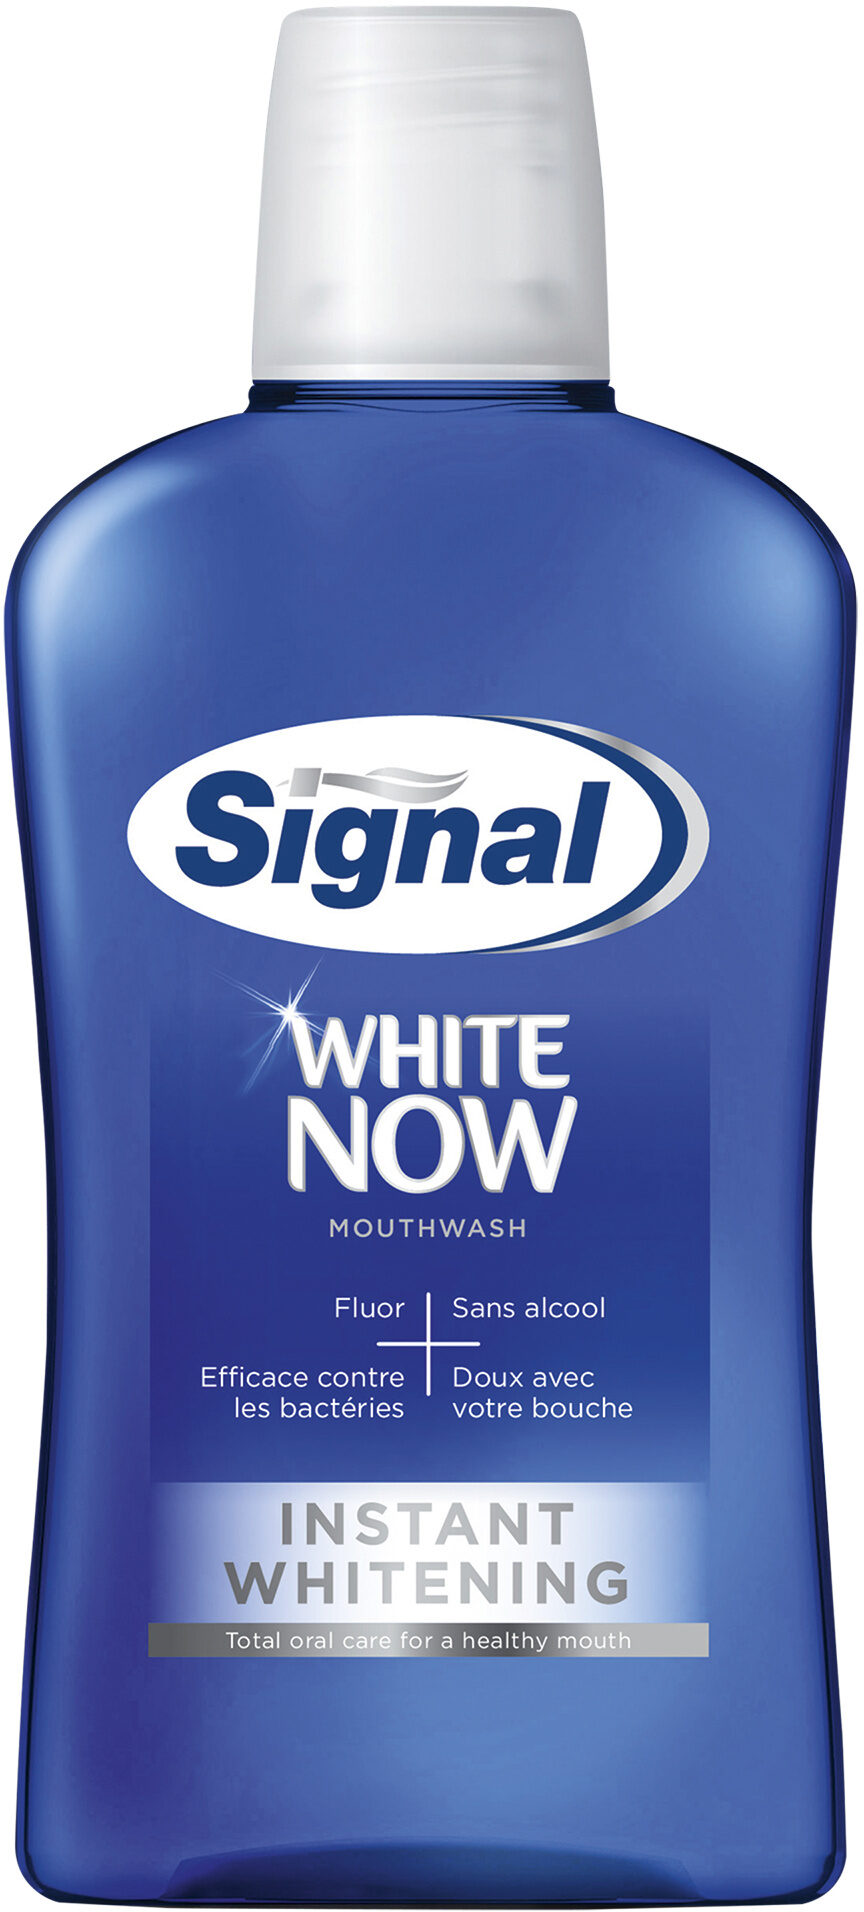 SIGNAL Bain de Bouche Antibactérien White Now 500ml - Produto - fr